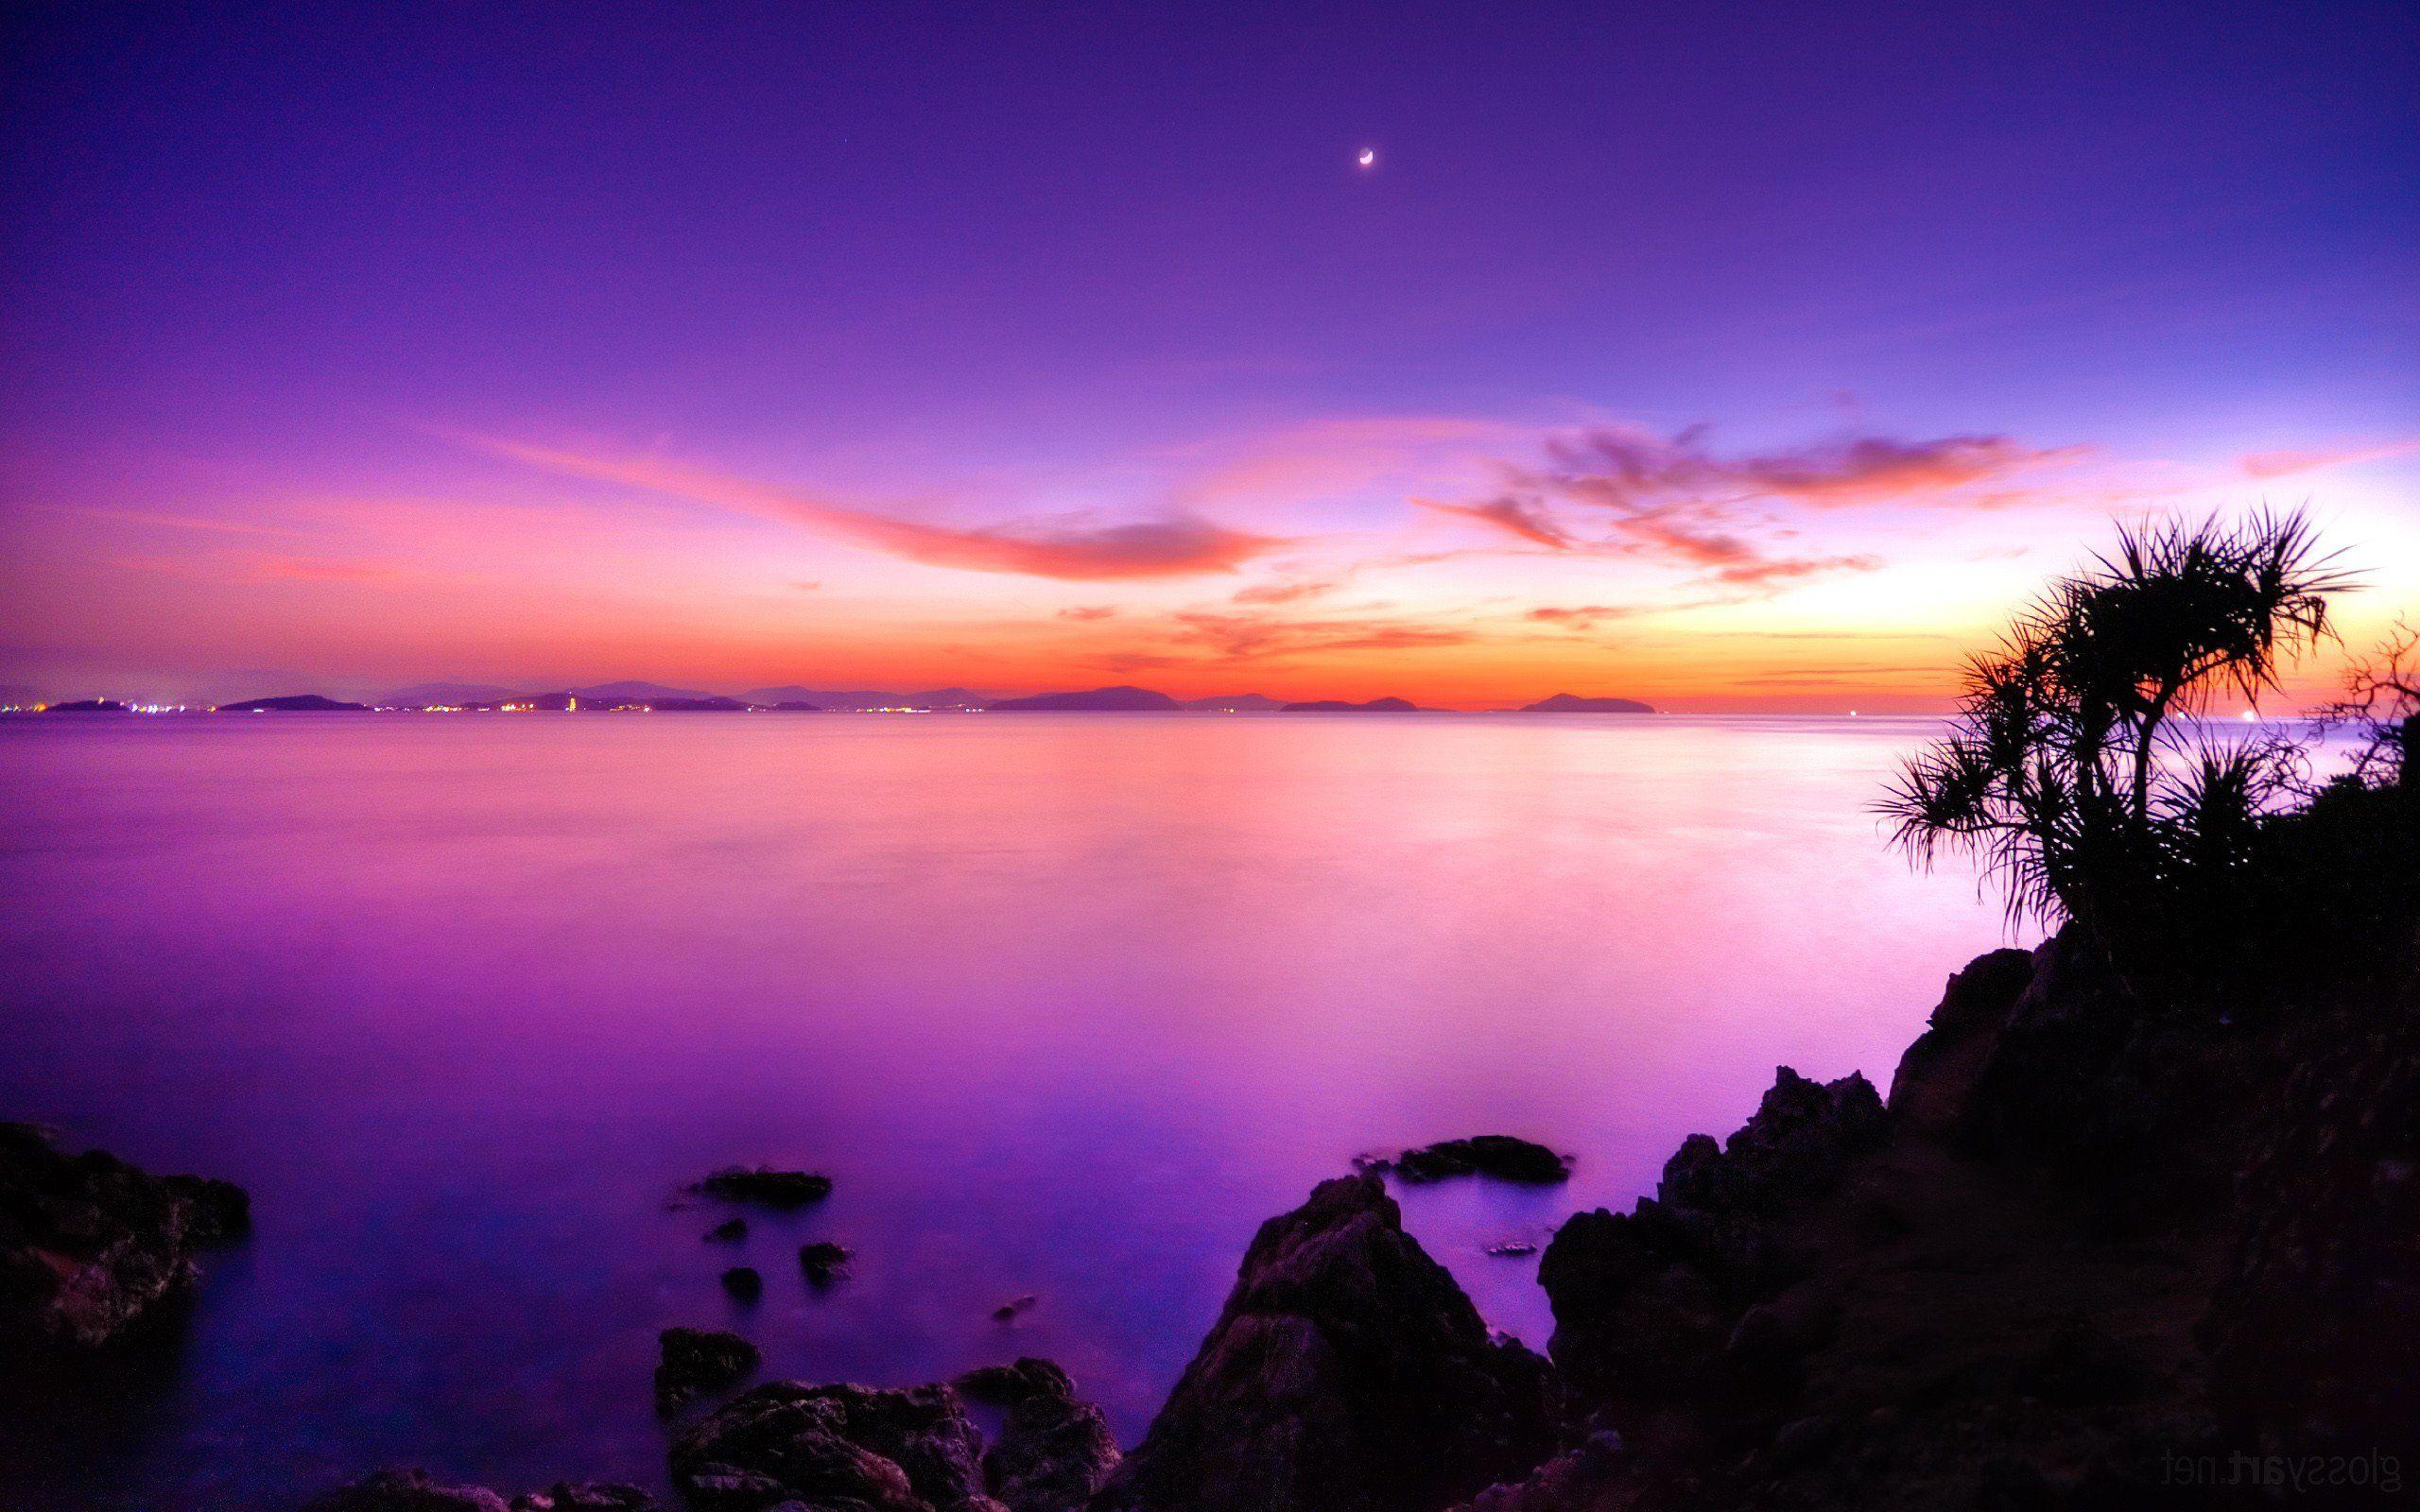 Pink Sunset, HD Nature, 4k Wallpaper, Image, Background, Photo